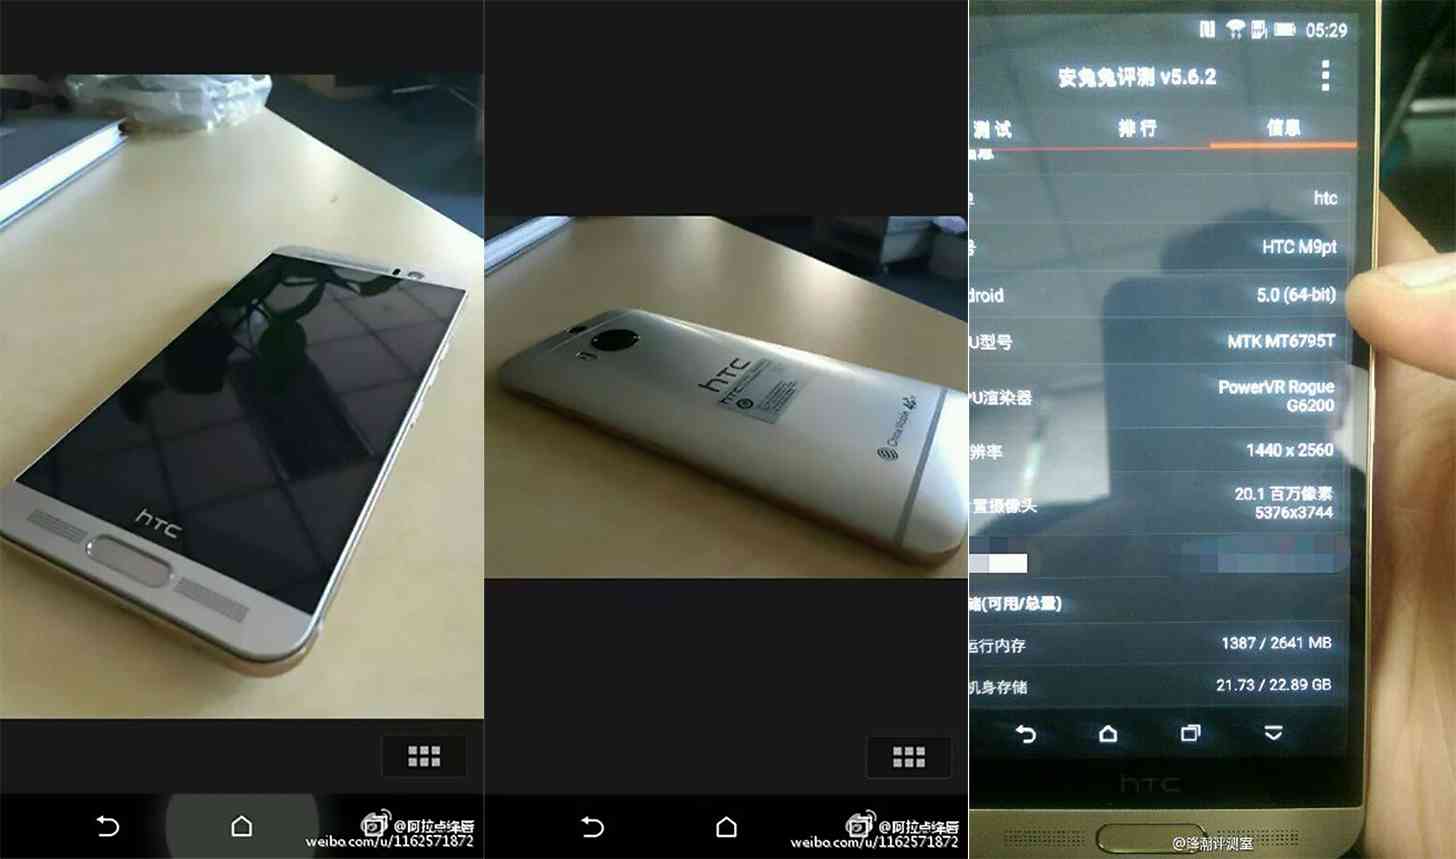 HTC One M9+ photos leak